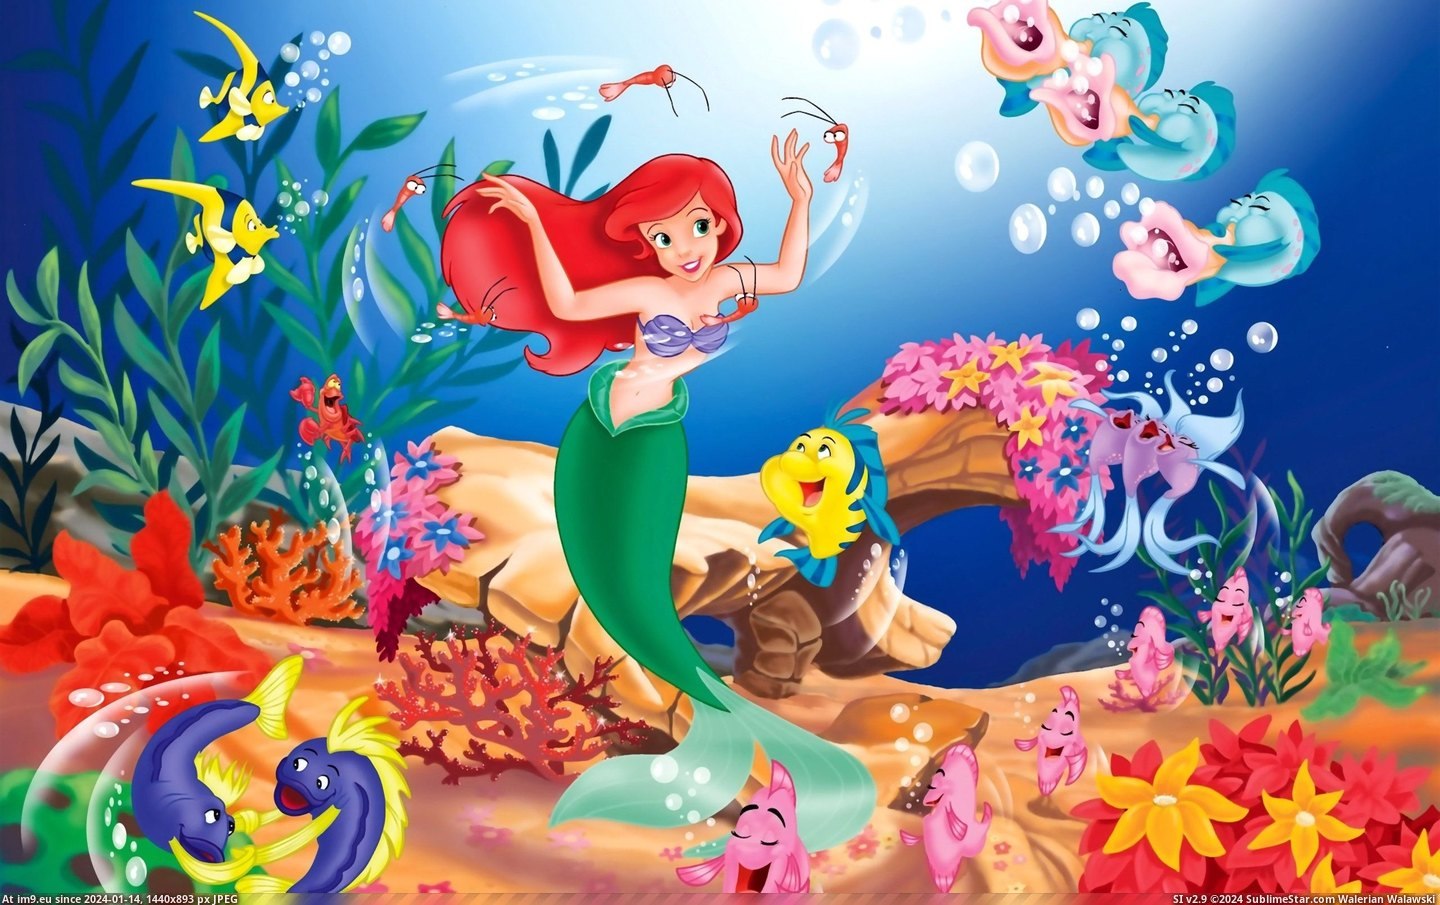 #Wallpaper #Disney #Mermaid #Wide Disney The Little Mermaid Wide HD Wallpaper Pic. (Bild von album Unique HD Wallpapers))